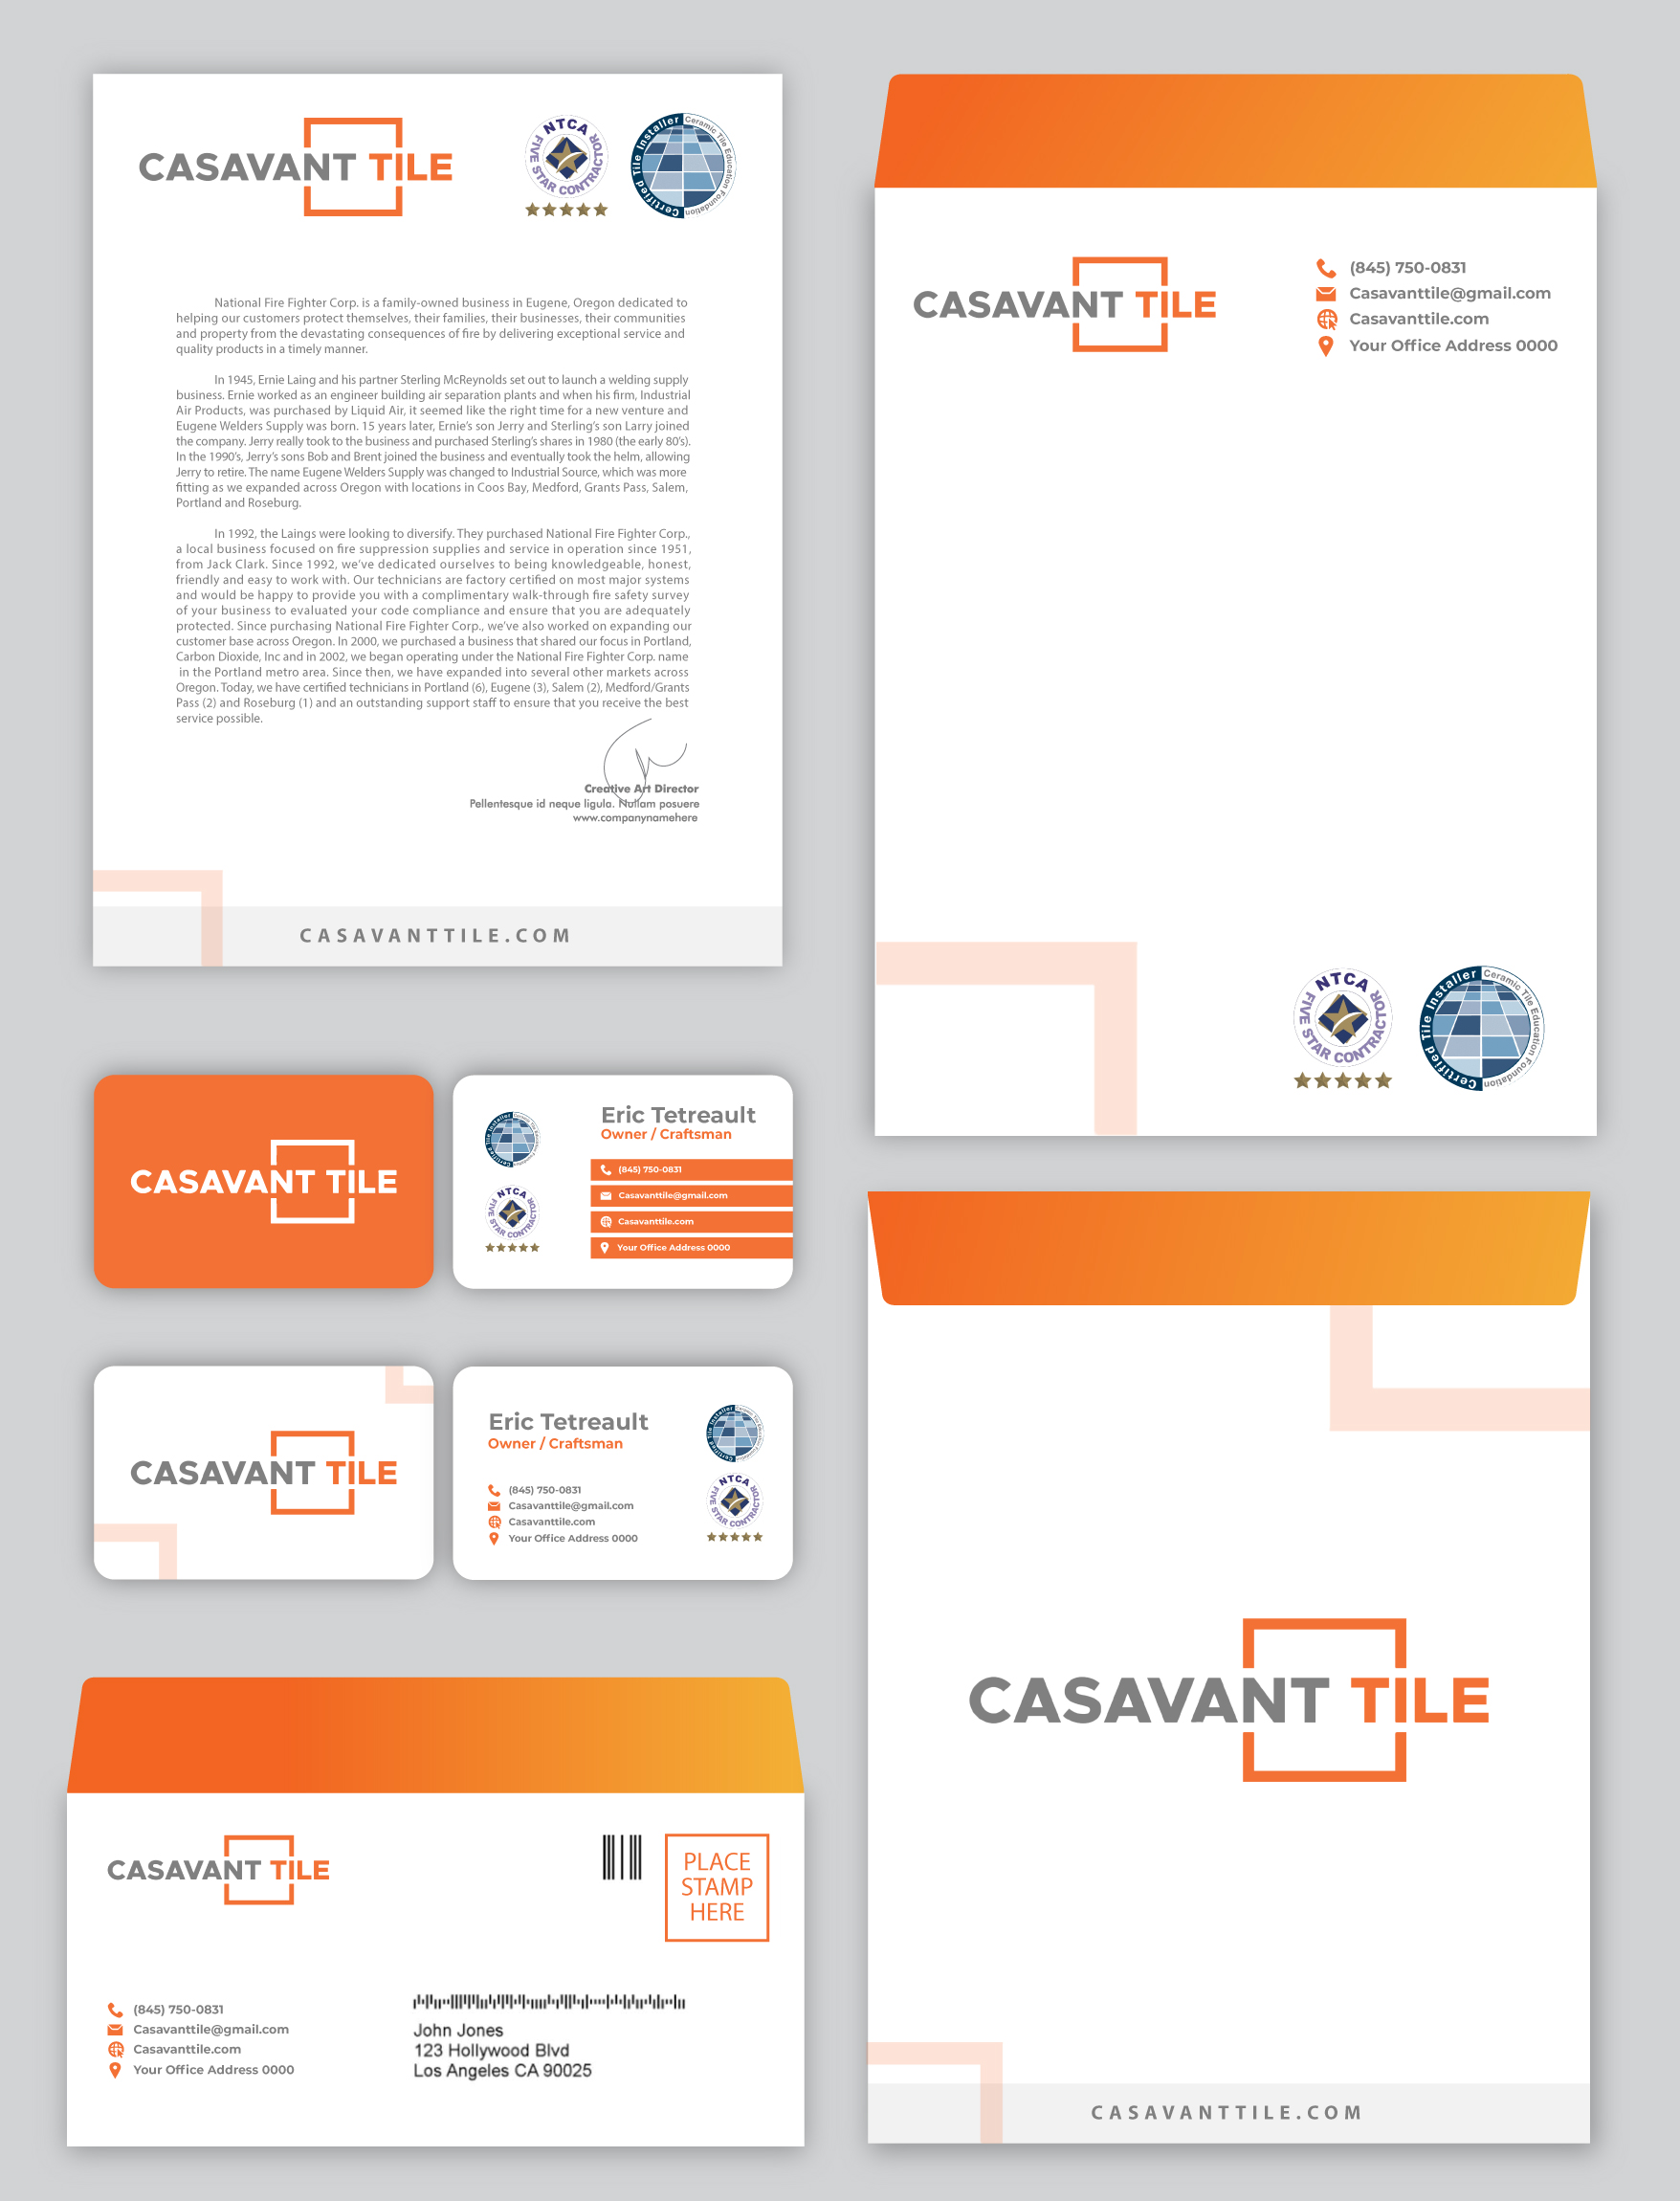 Business Card & Stationery Design entry 1776328 submitted by appa to the Business Card & Stationery Design for Casavant Tile run by CasavantTile